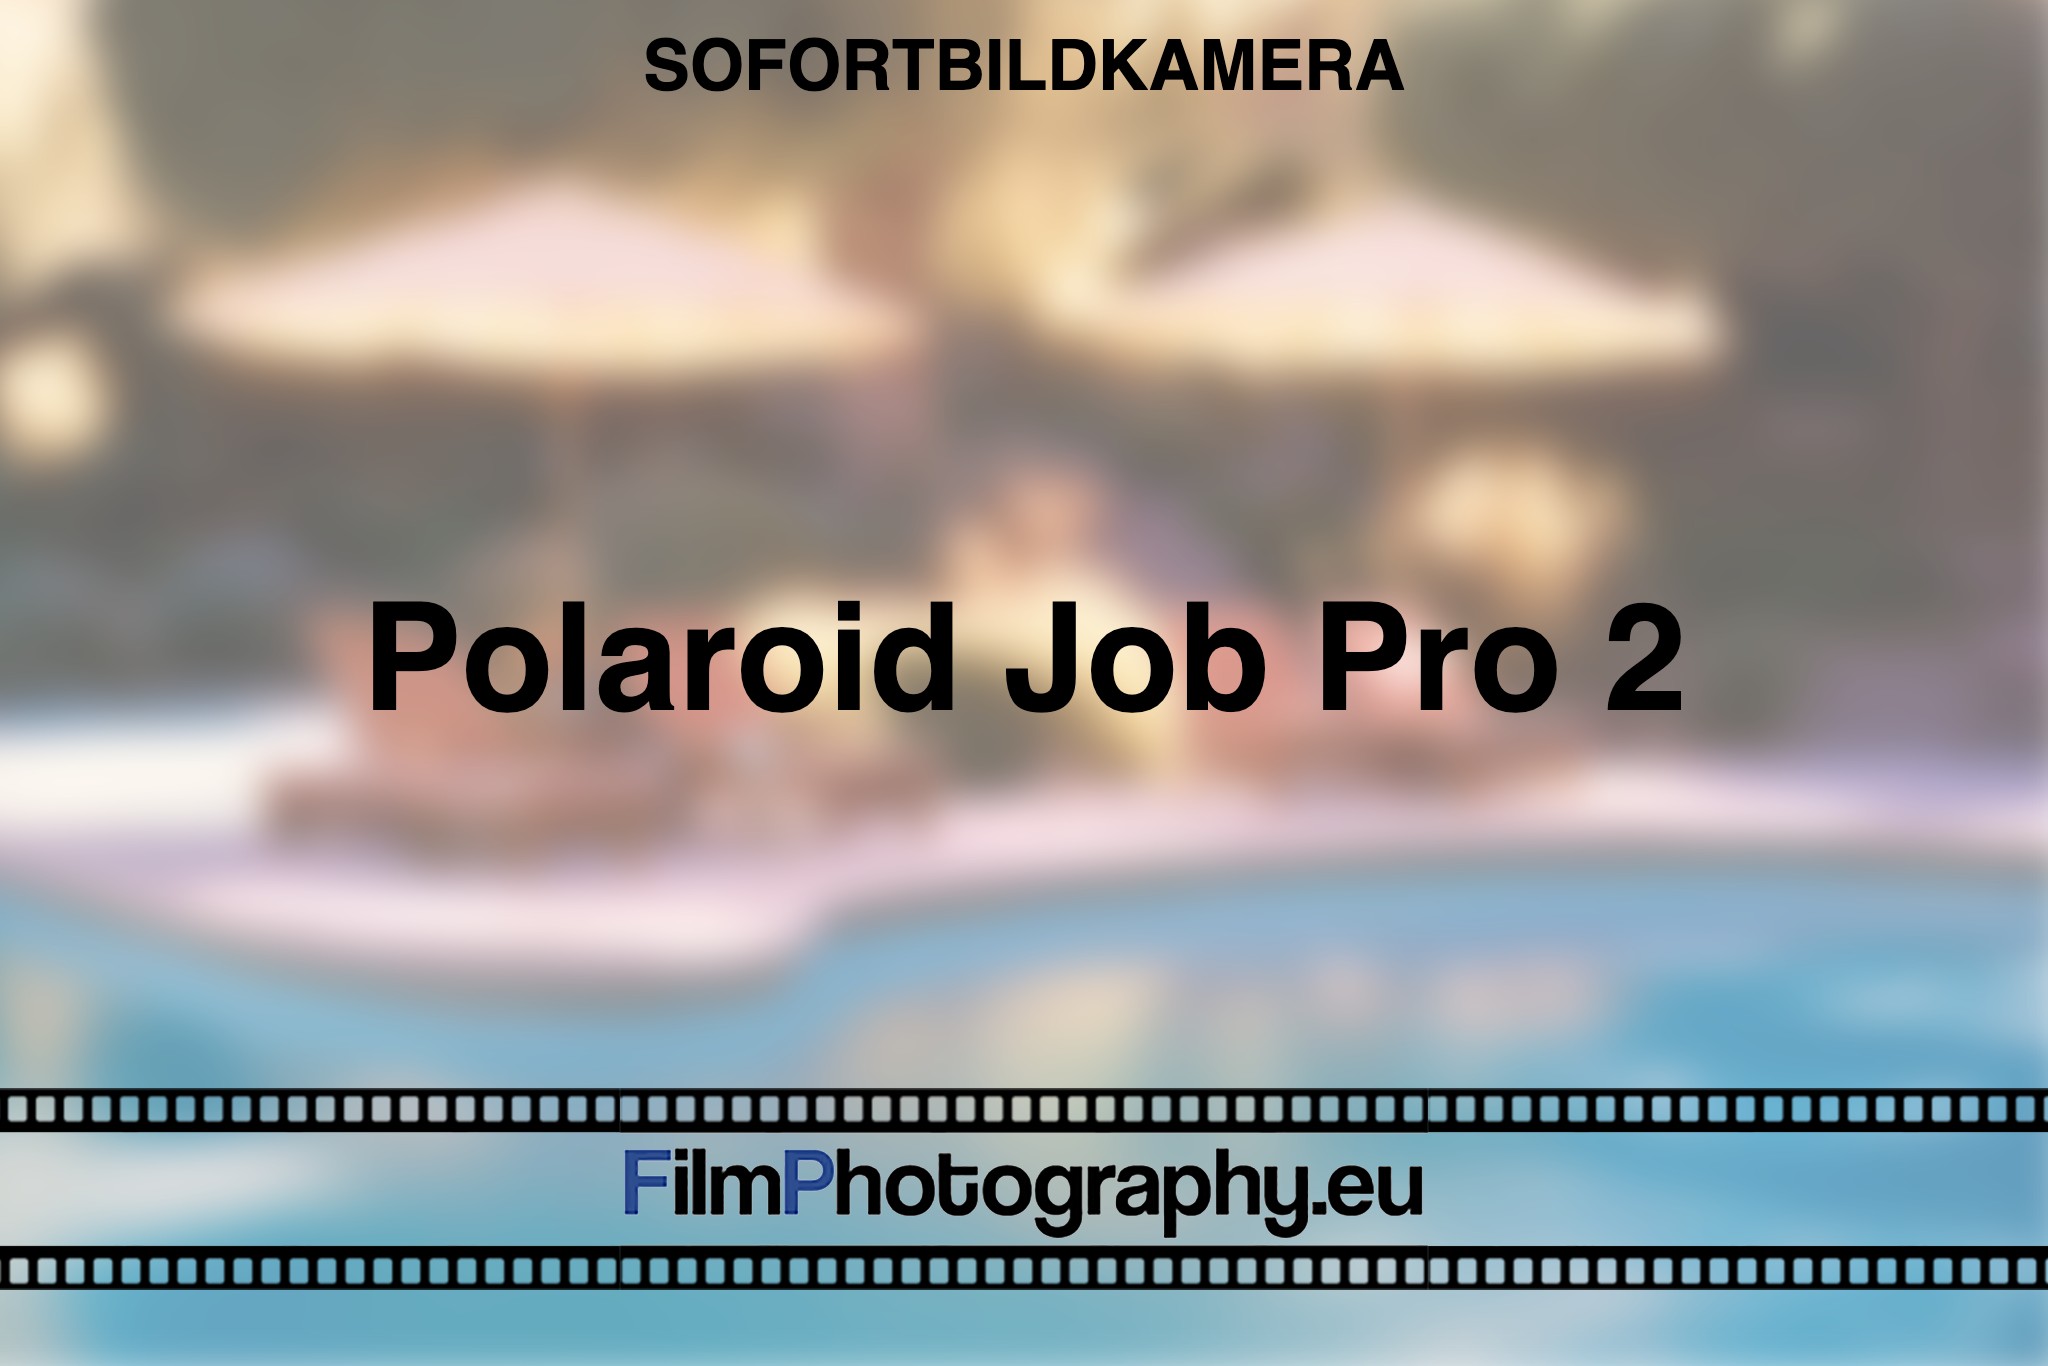 polaroid-job-pro-2-sofortbildkamera-bnv